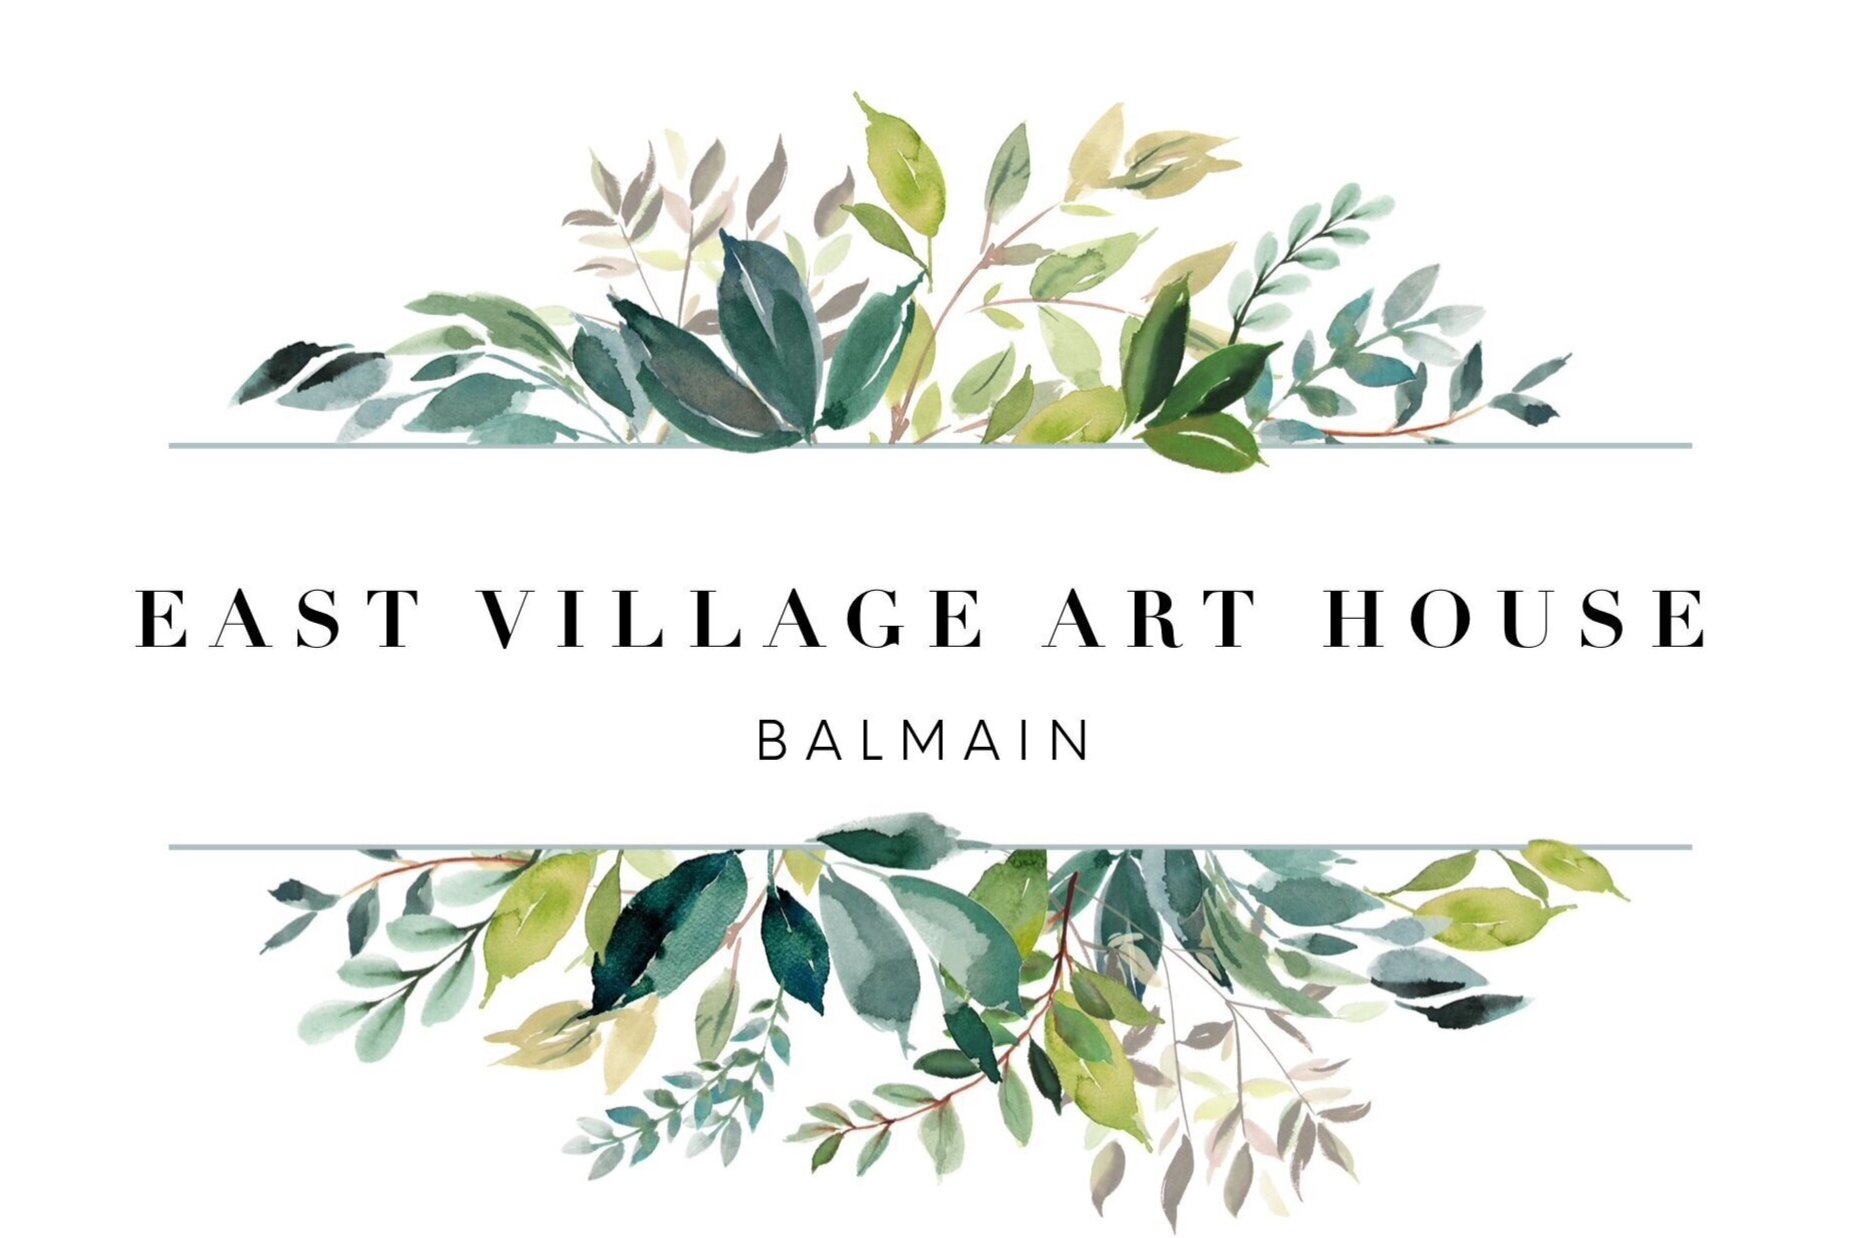 East Village Art House - Balmain